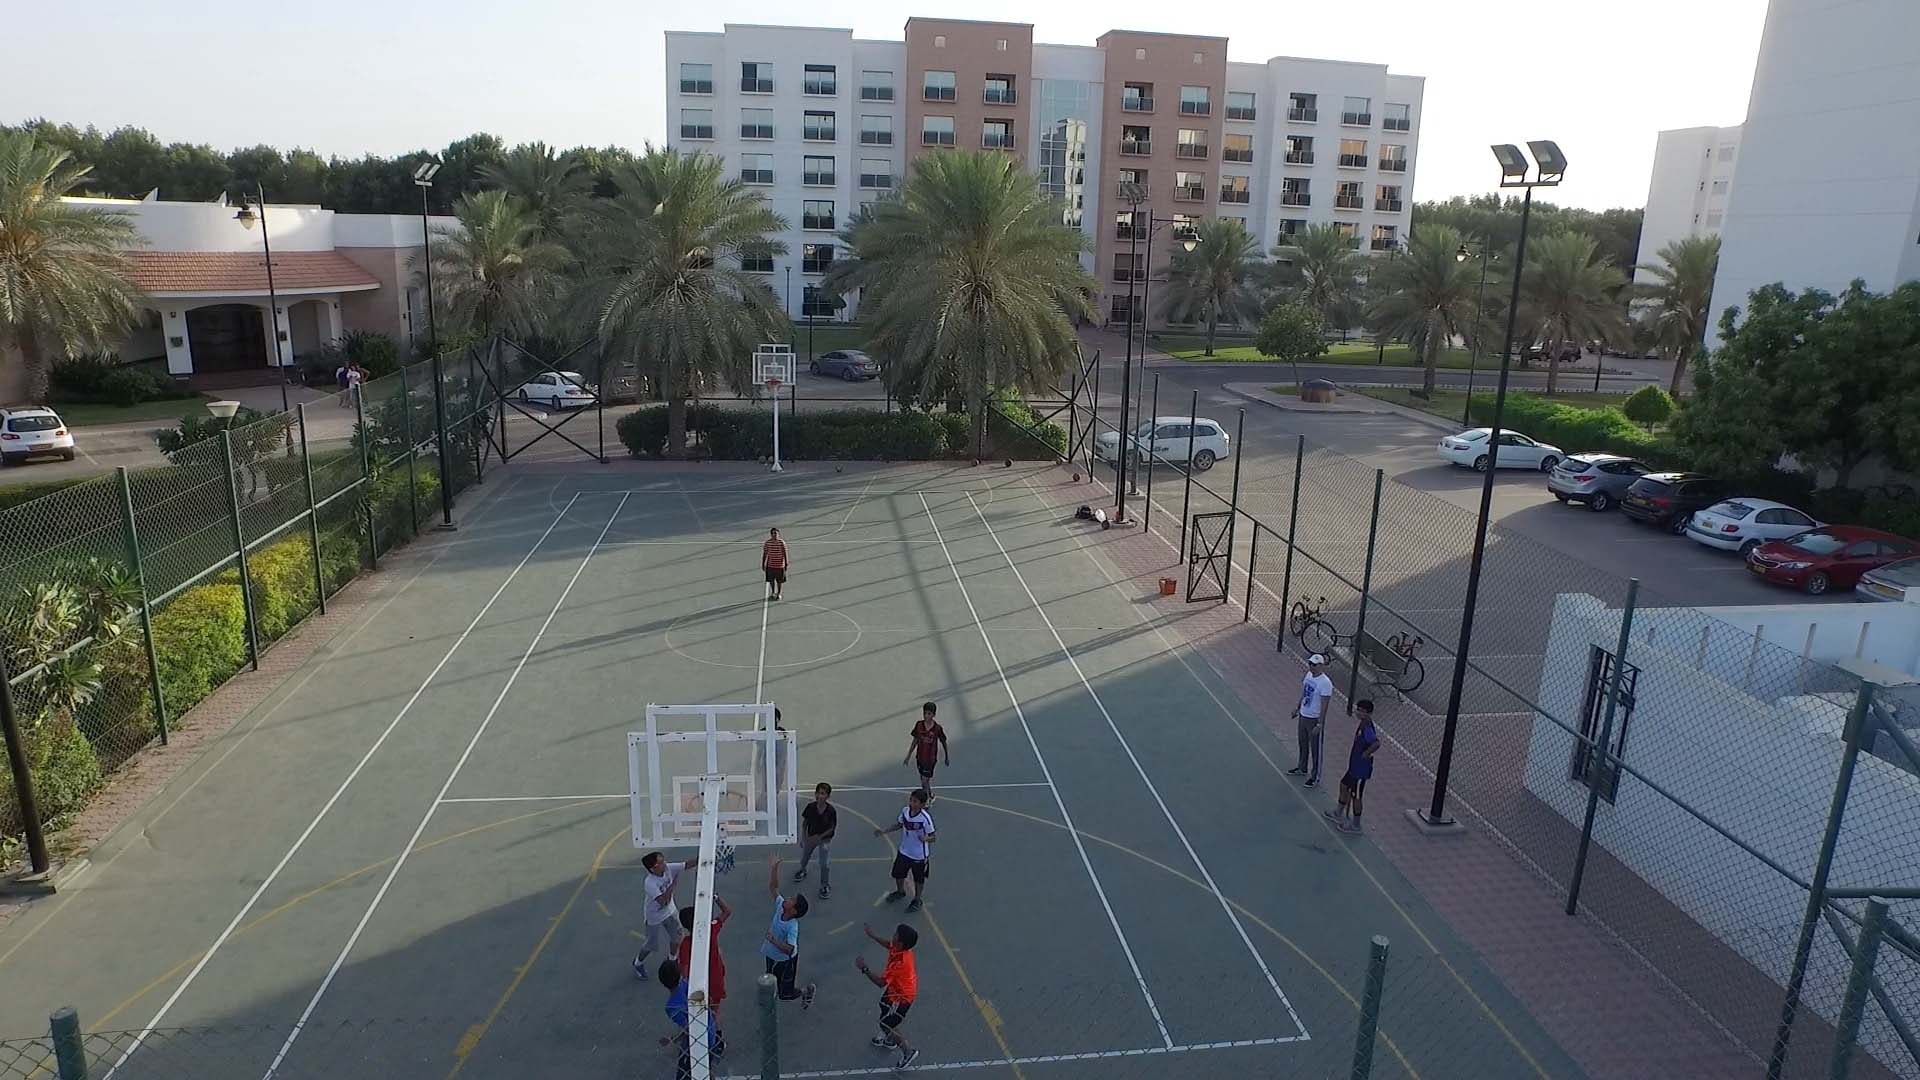 Saud Bahwan Palm Garden basketball court overview